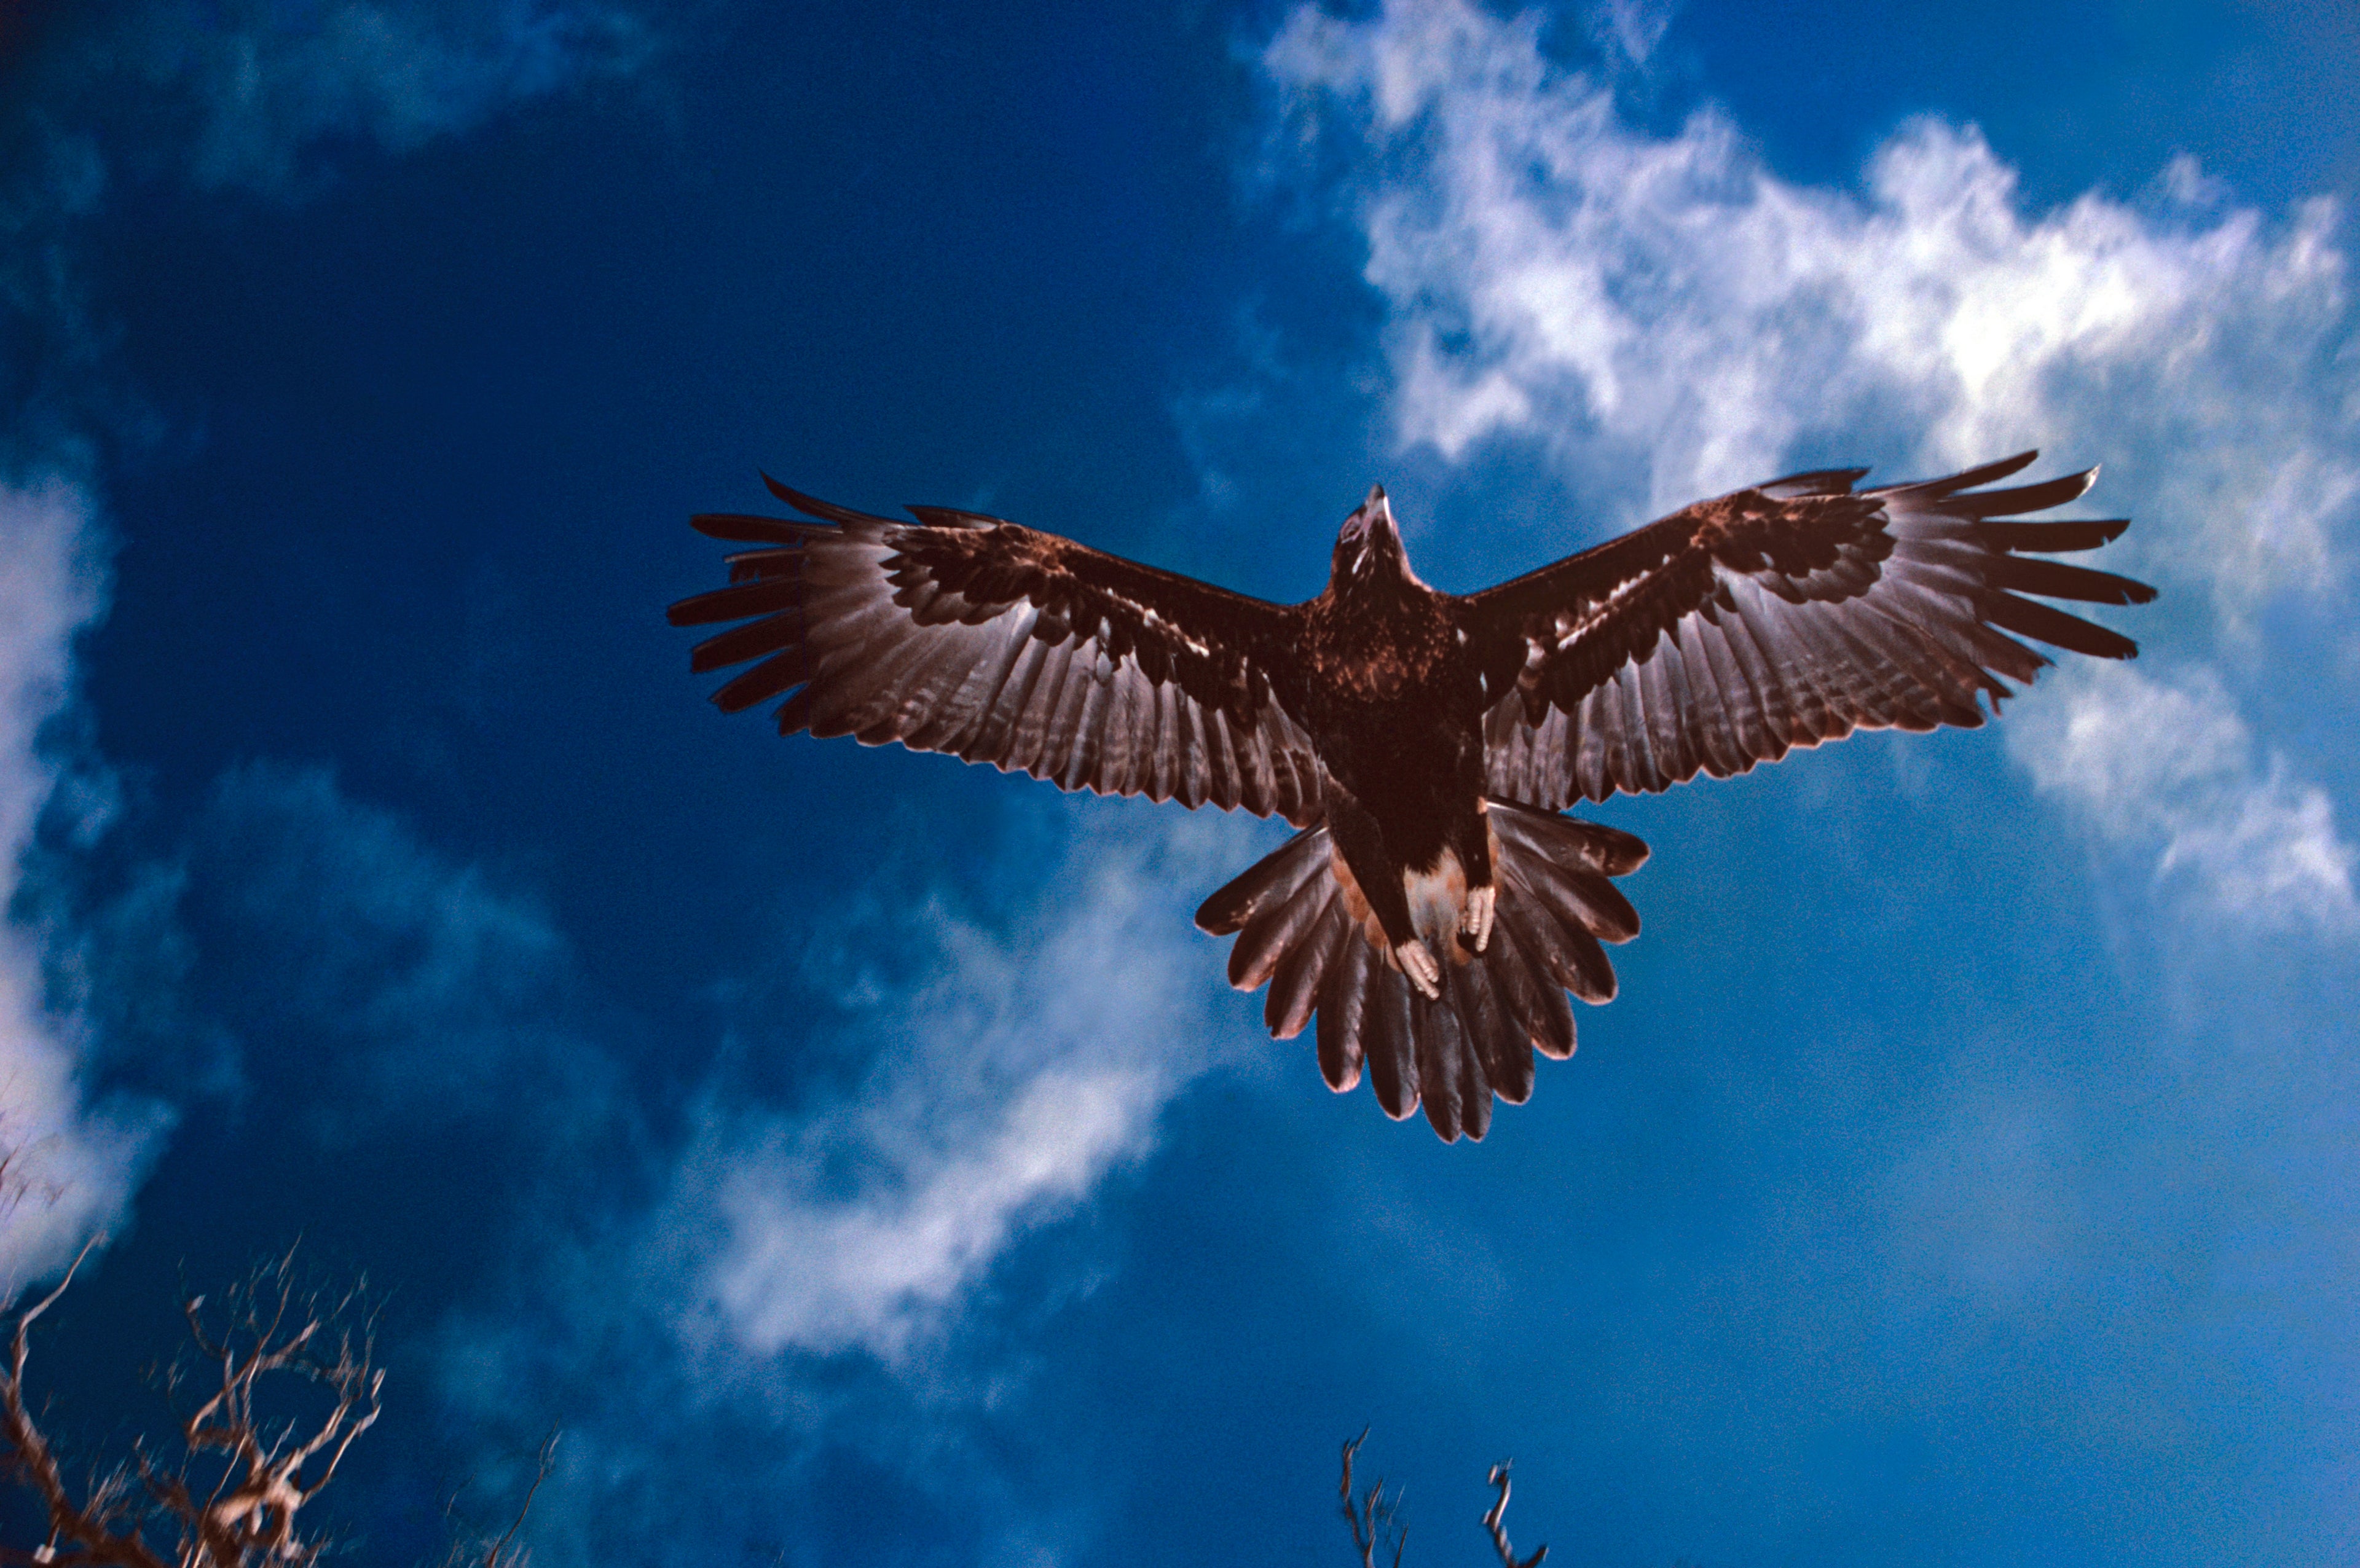 Wedge-tailed eagle